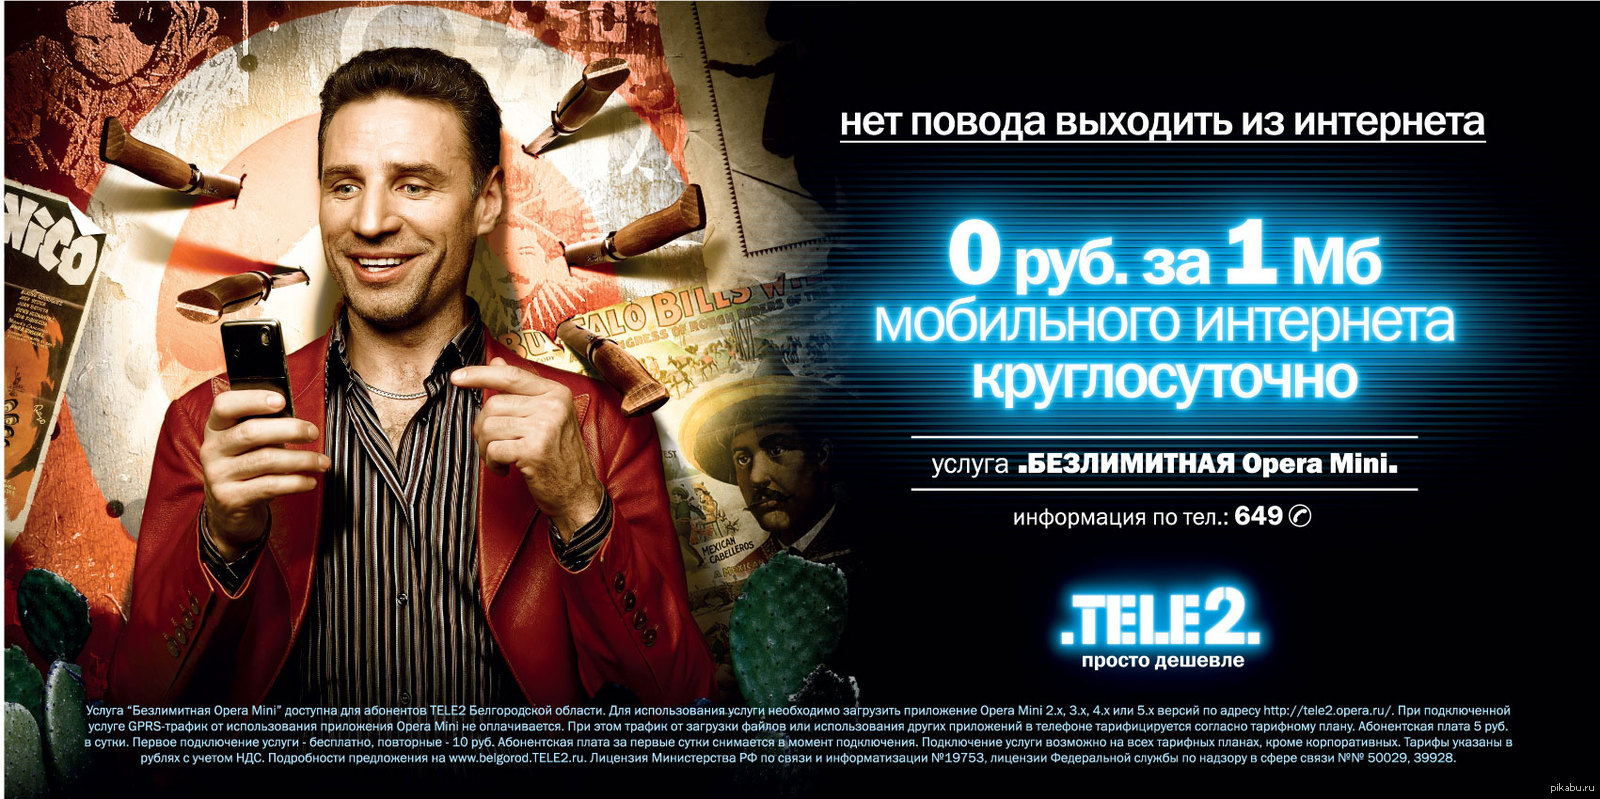 Tele2 ребрендинг. Теле2 реклама 2008. Старая реклама теле2. Теле2 Казахстан реклама. Теле2 реклама 2018.